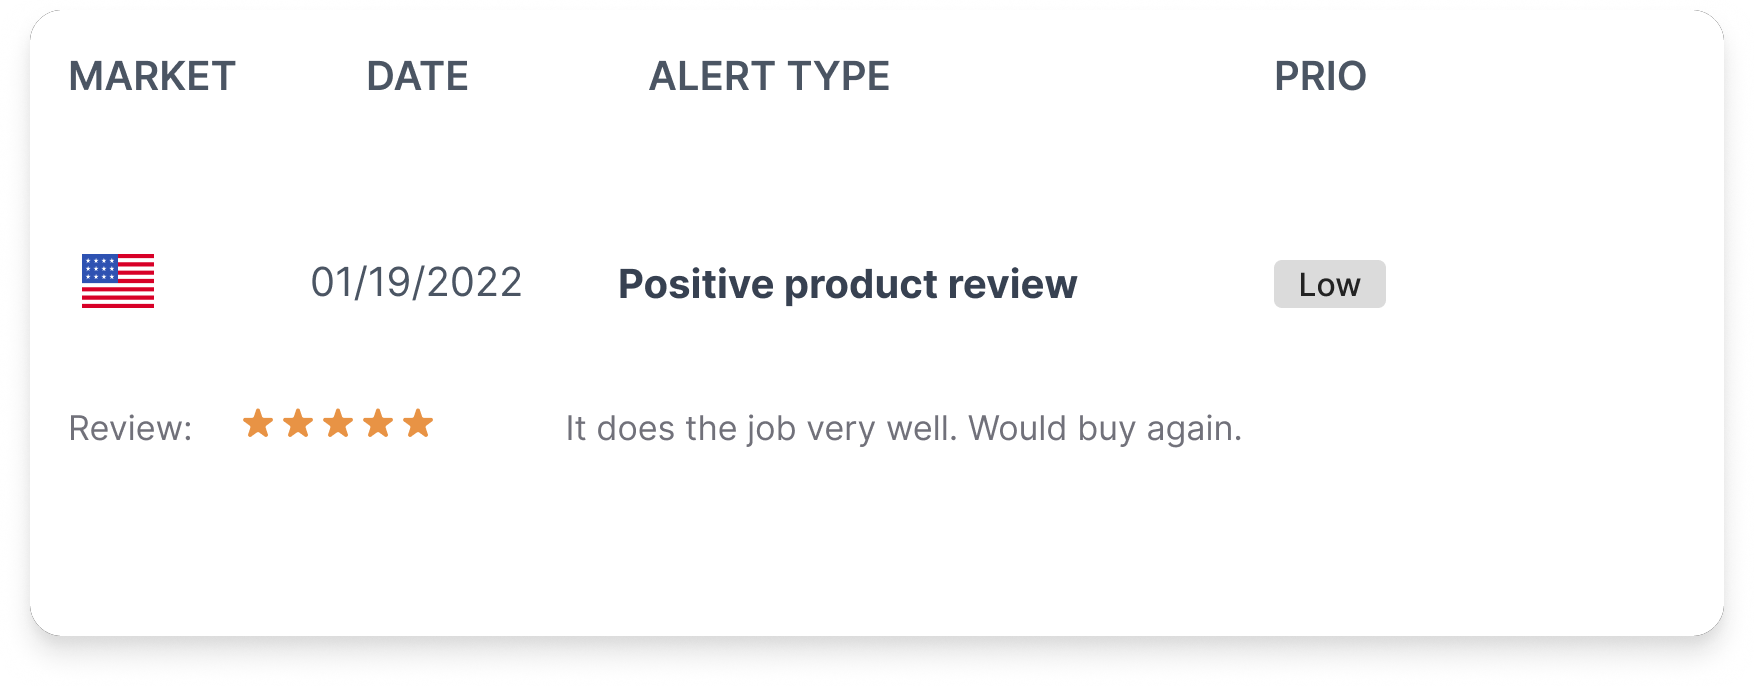 Amazon Alert Positive product review